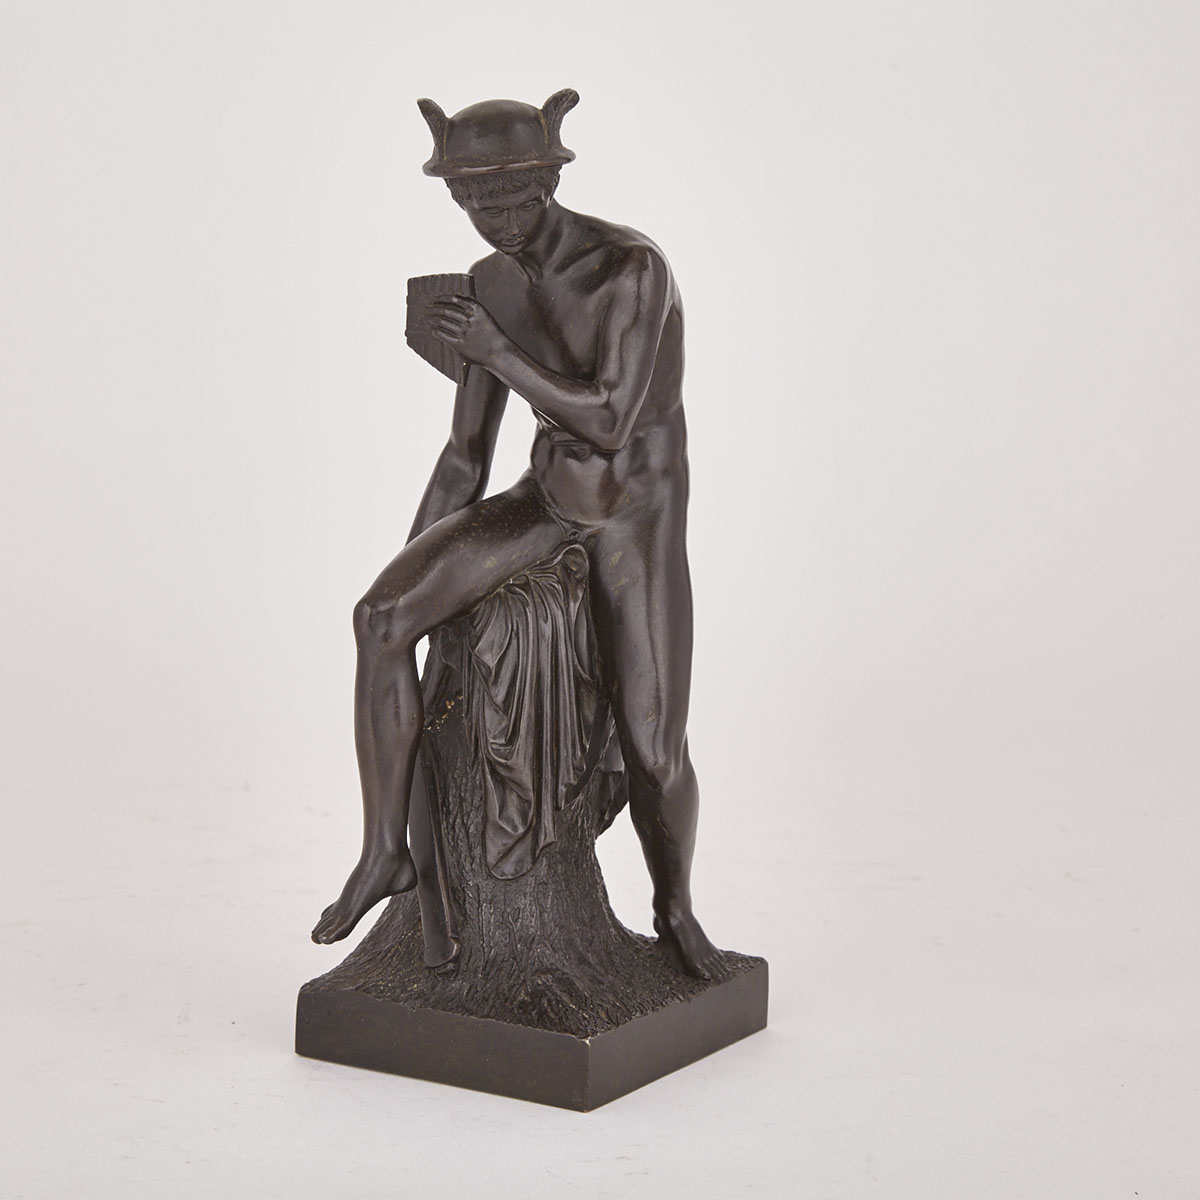 Italian Grand Tour Souvenir Patinated Bronze Figure of Pan, 19th century